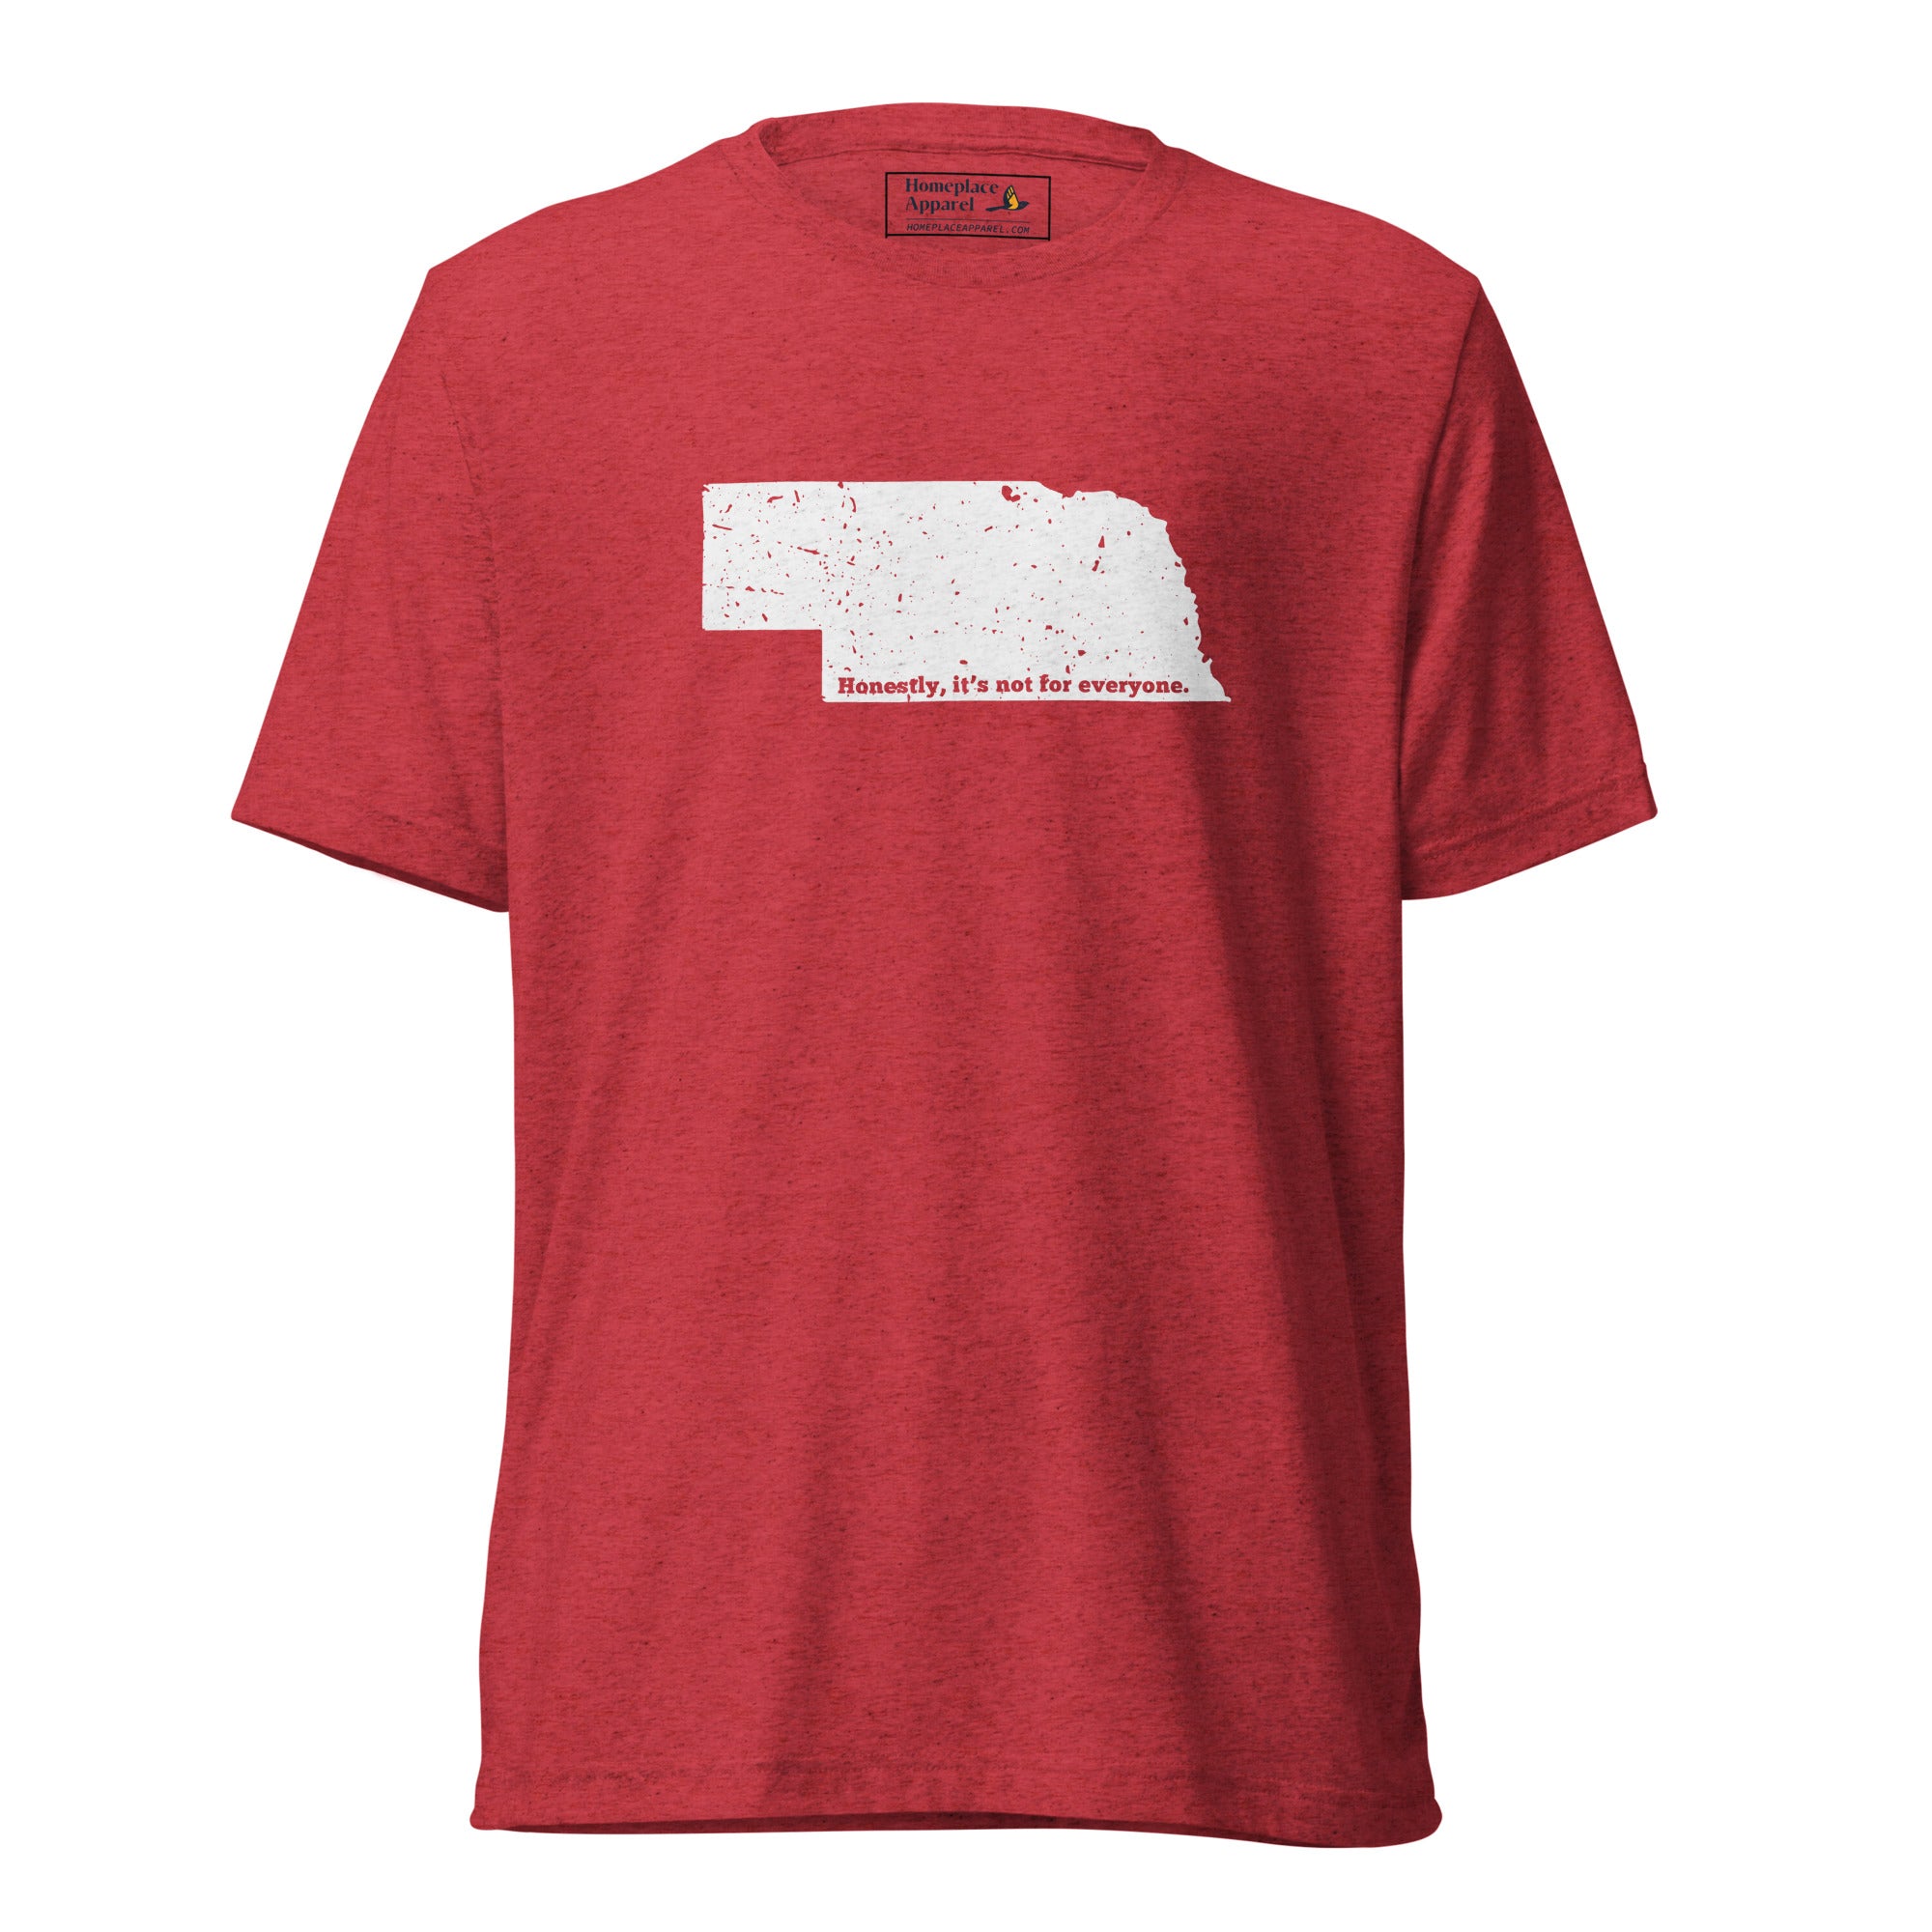 unisex-tri-blend-t-shirt-red-triblend-front-6512047477eb5.jpg